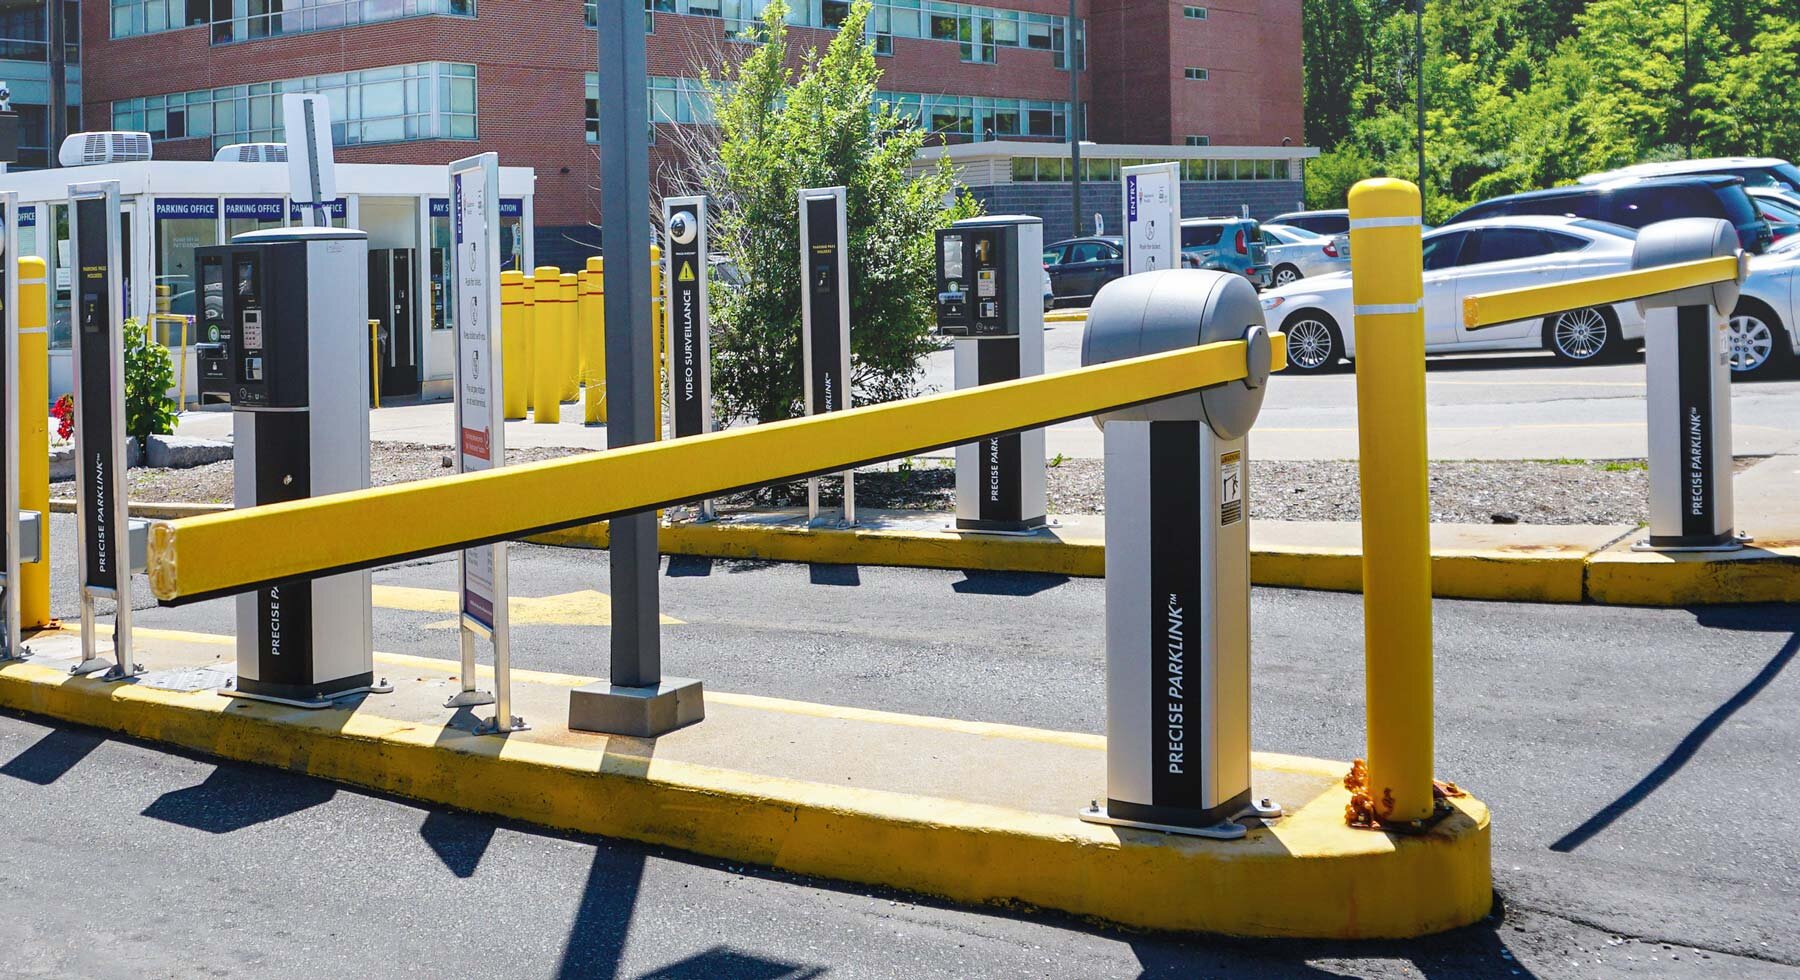 Skidata+Gated+Parking+System+Barrier.Gate+Entry+at+Mackenzie+Health+in+Ontario+Canada